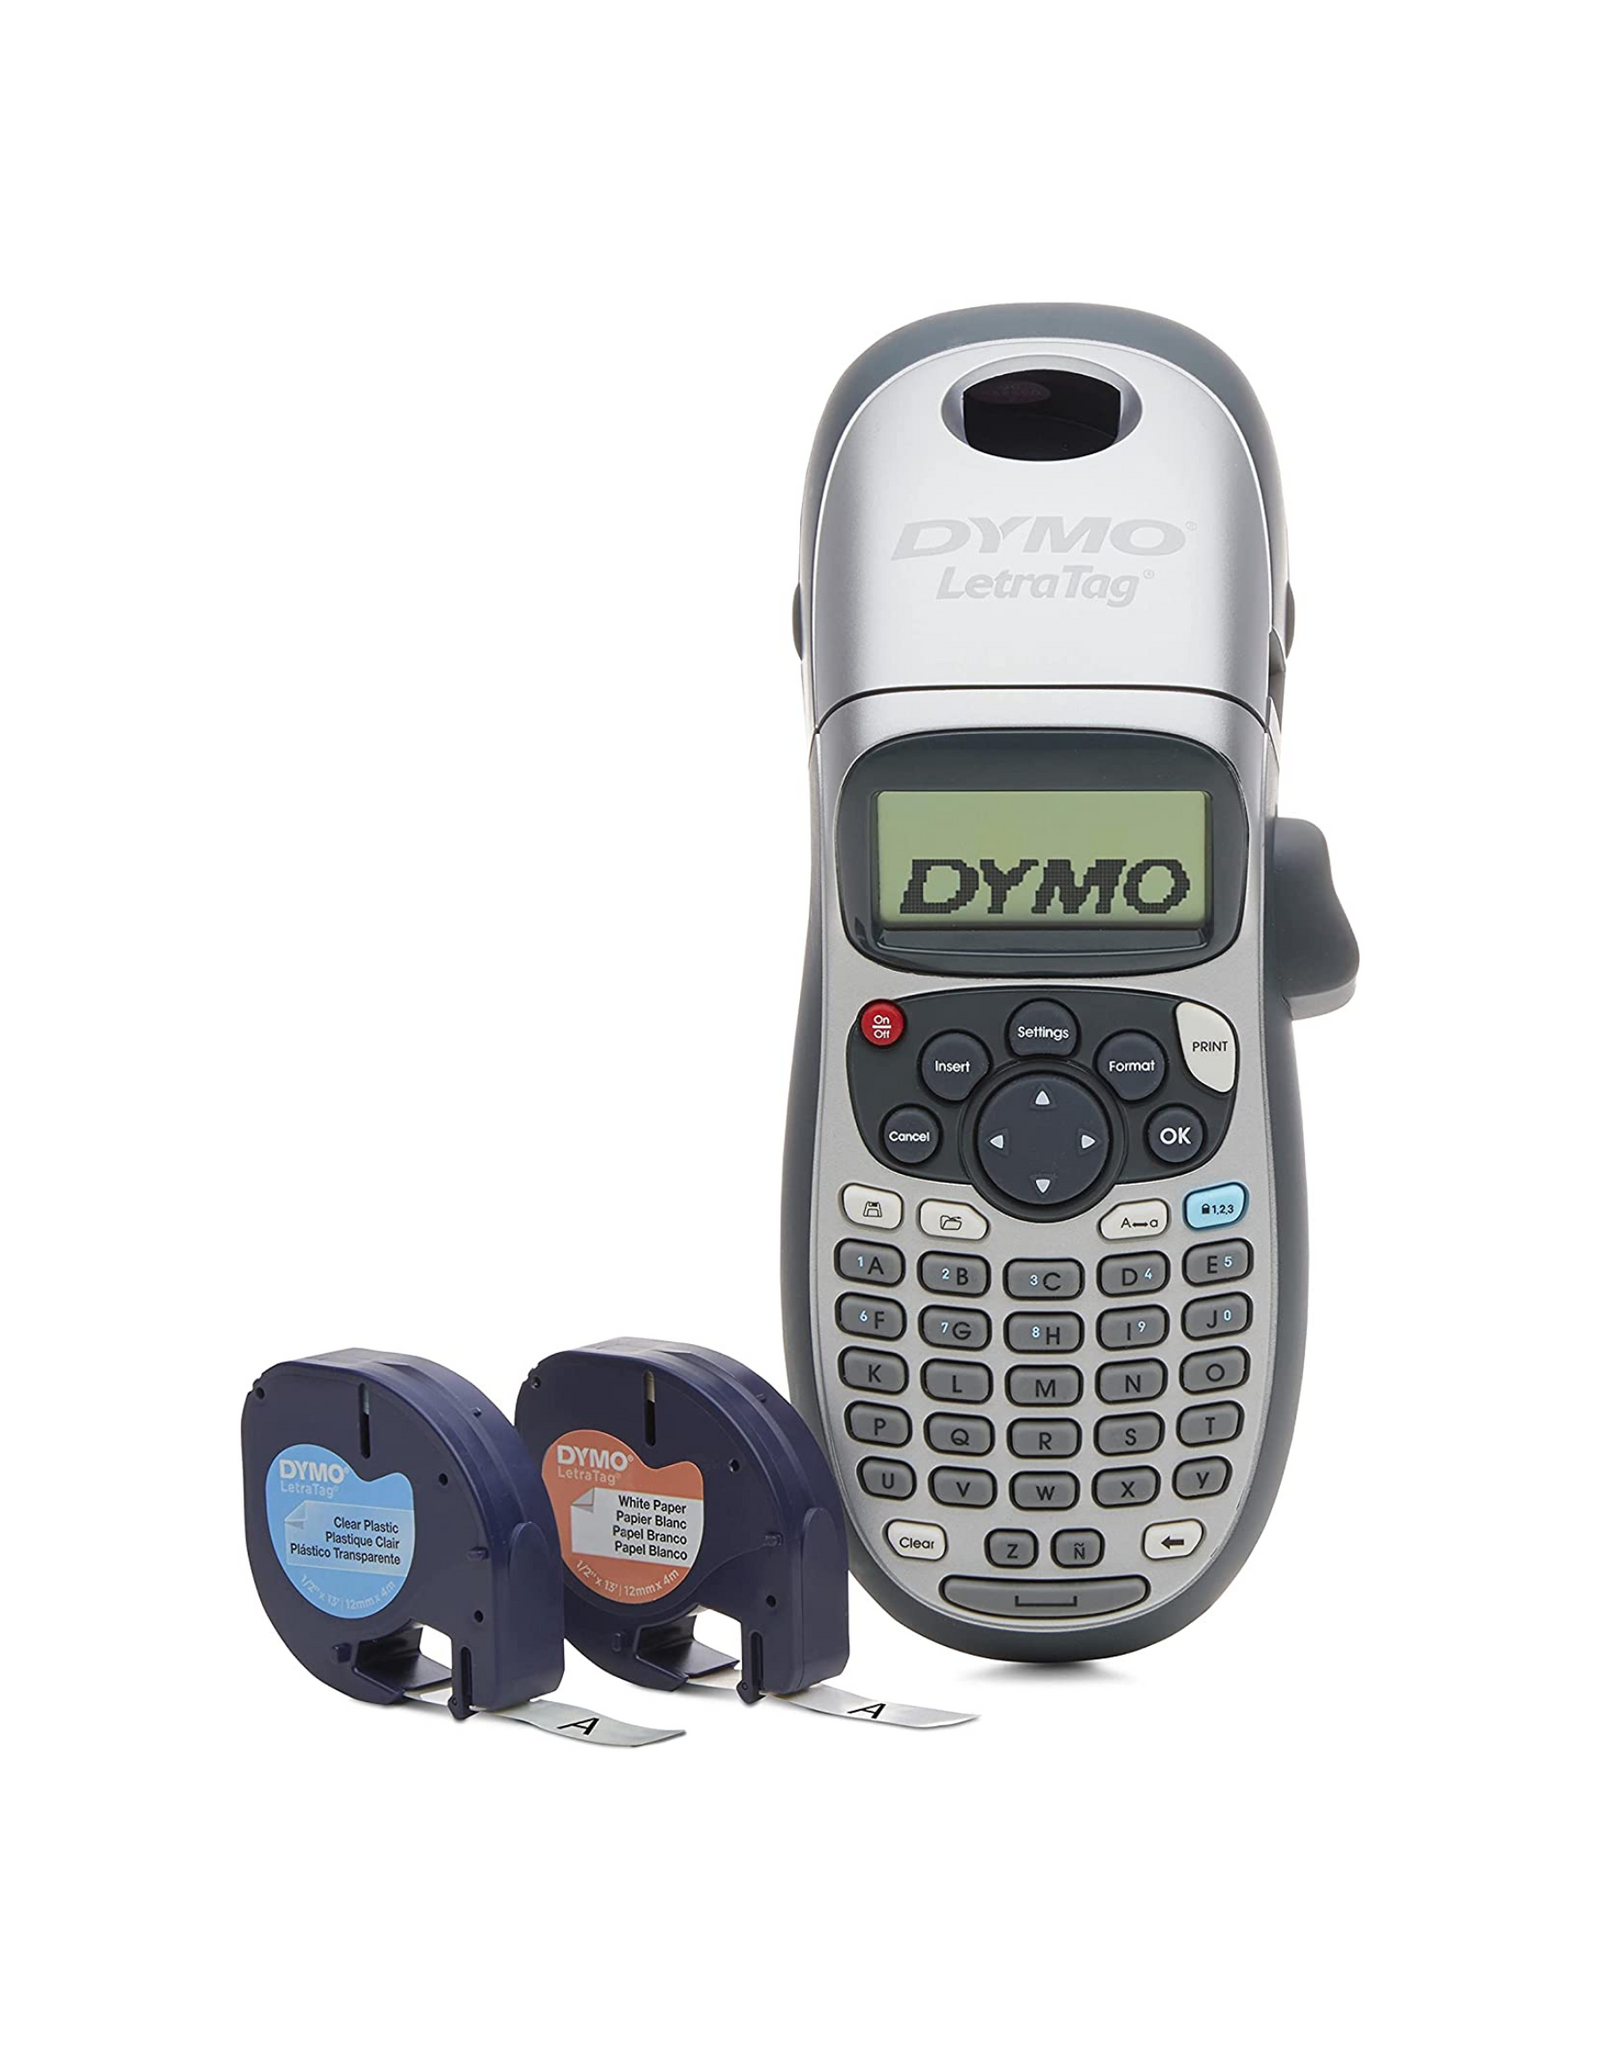 DYMO LetraTag LT-100H Handheld Label Maker 21455 (Machine + 2 Tapes)